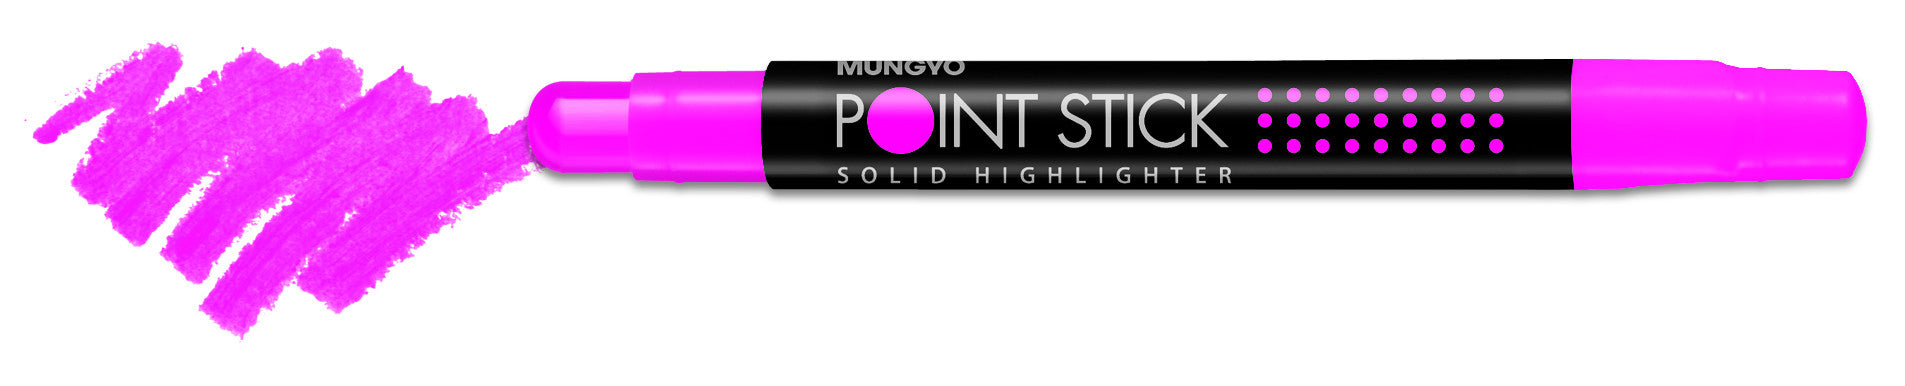 Point sticks - MSH